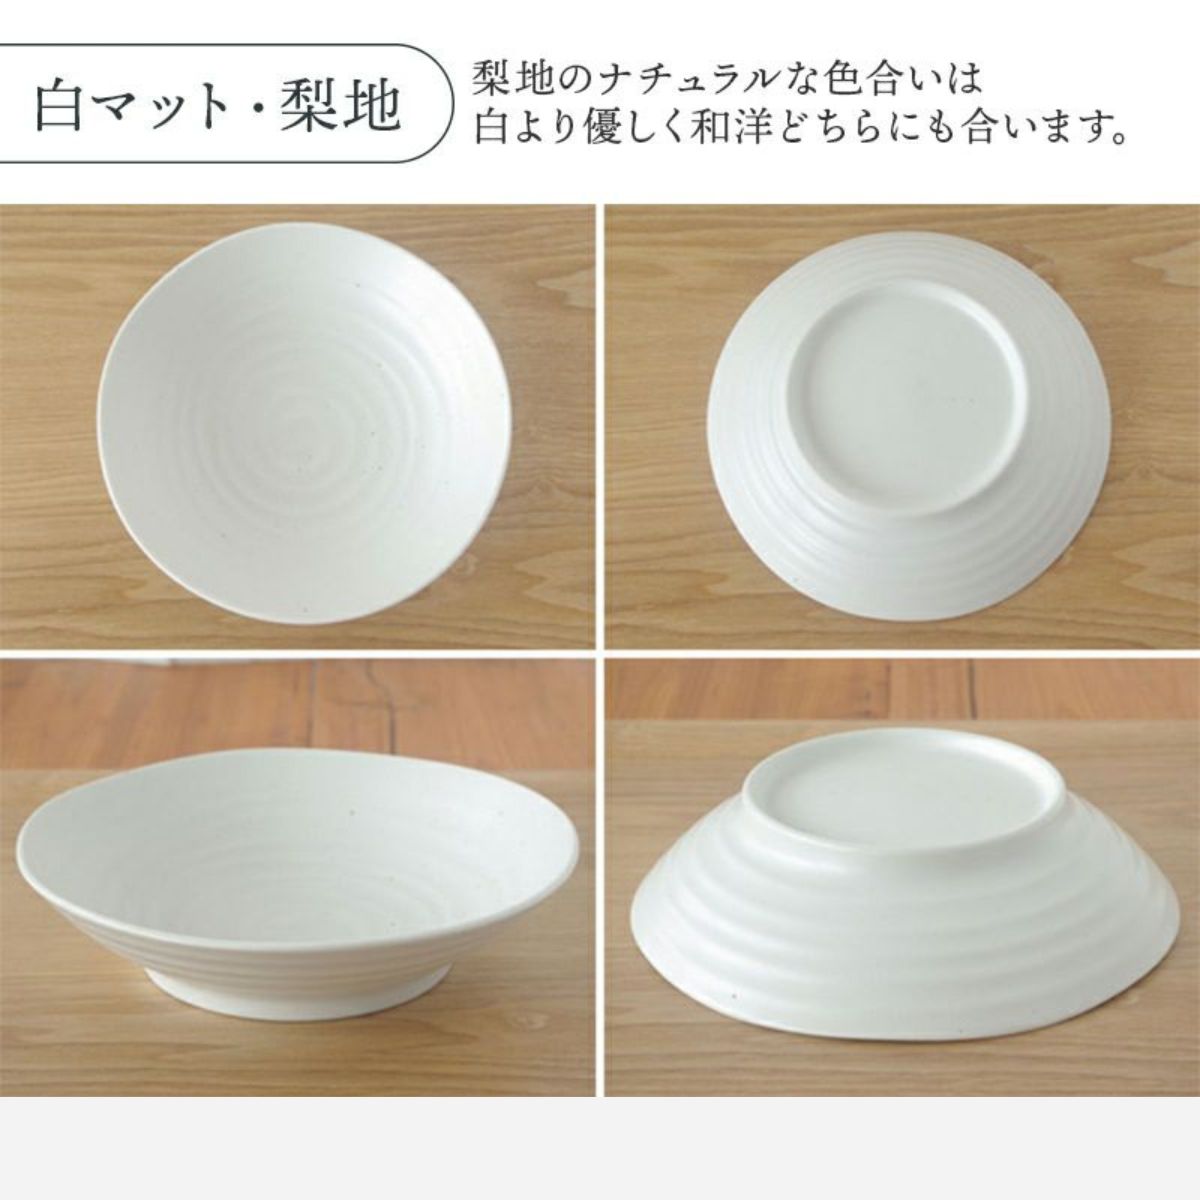 【EAST】パスタ皿・カレー皿